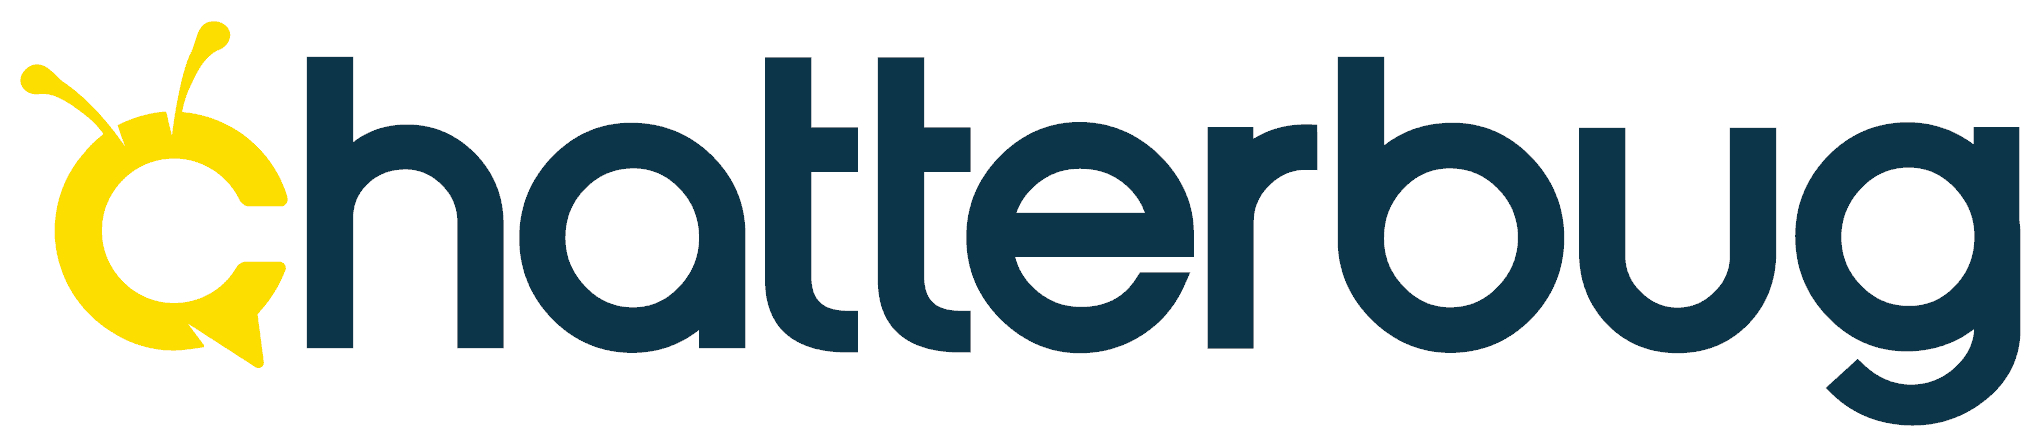 Chatterbug logo